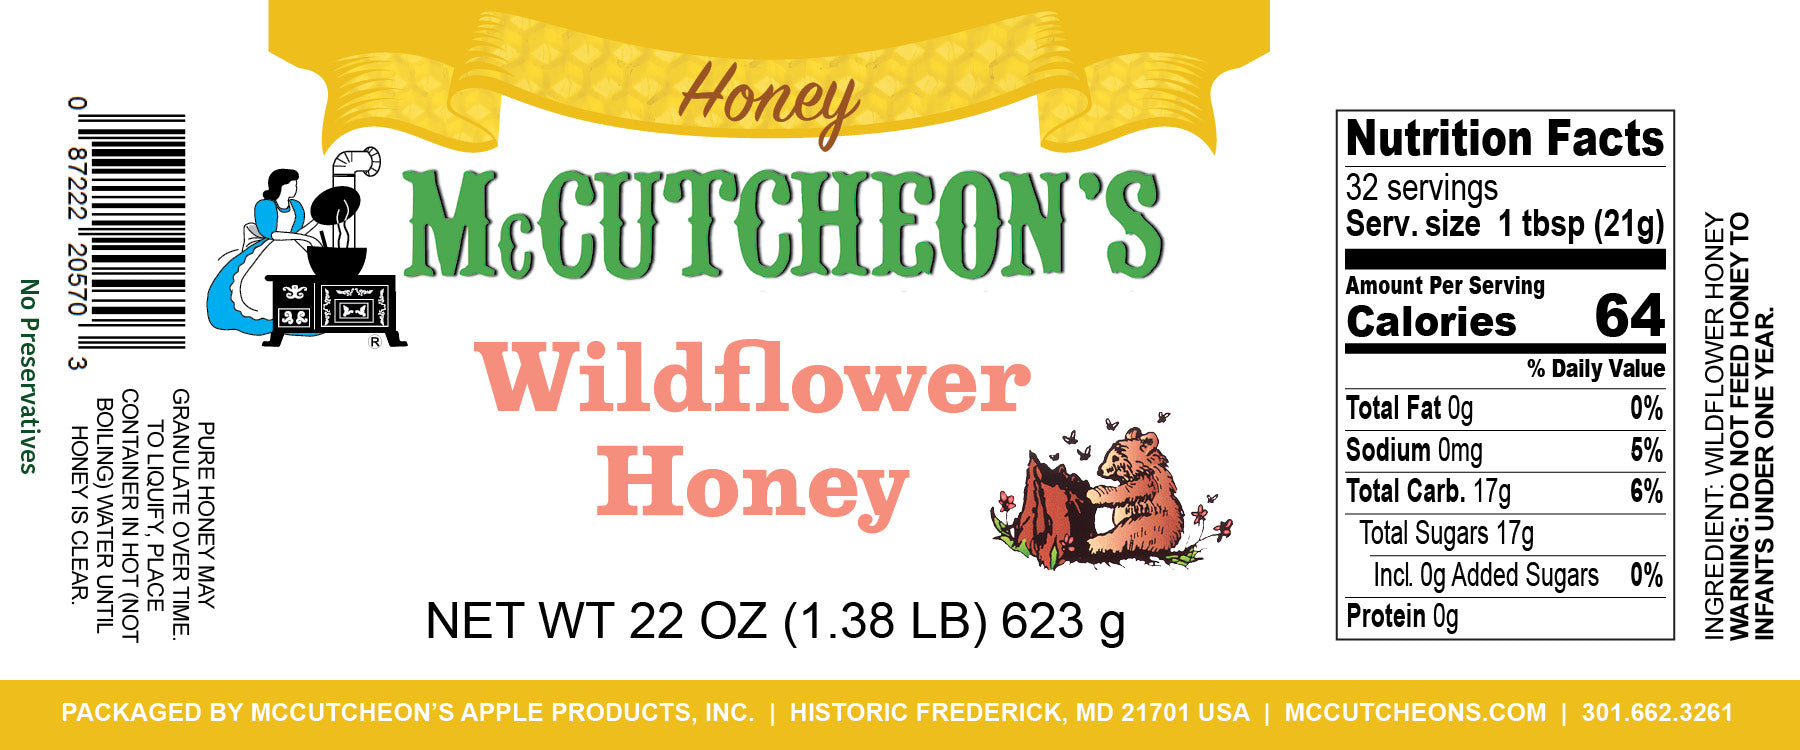 nutrition label for jar of McCutcheon's wildflower honey